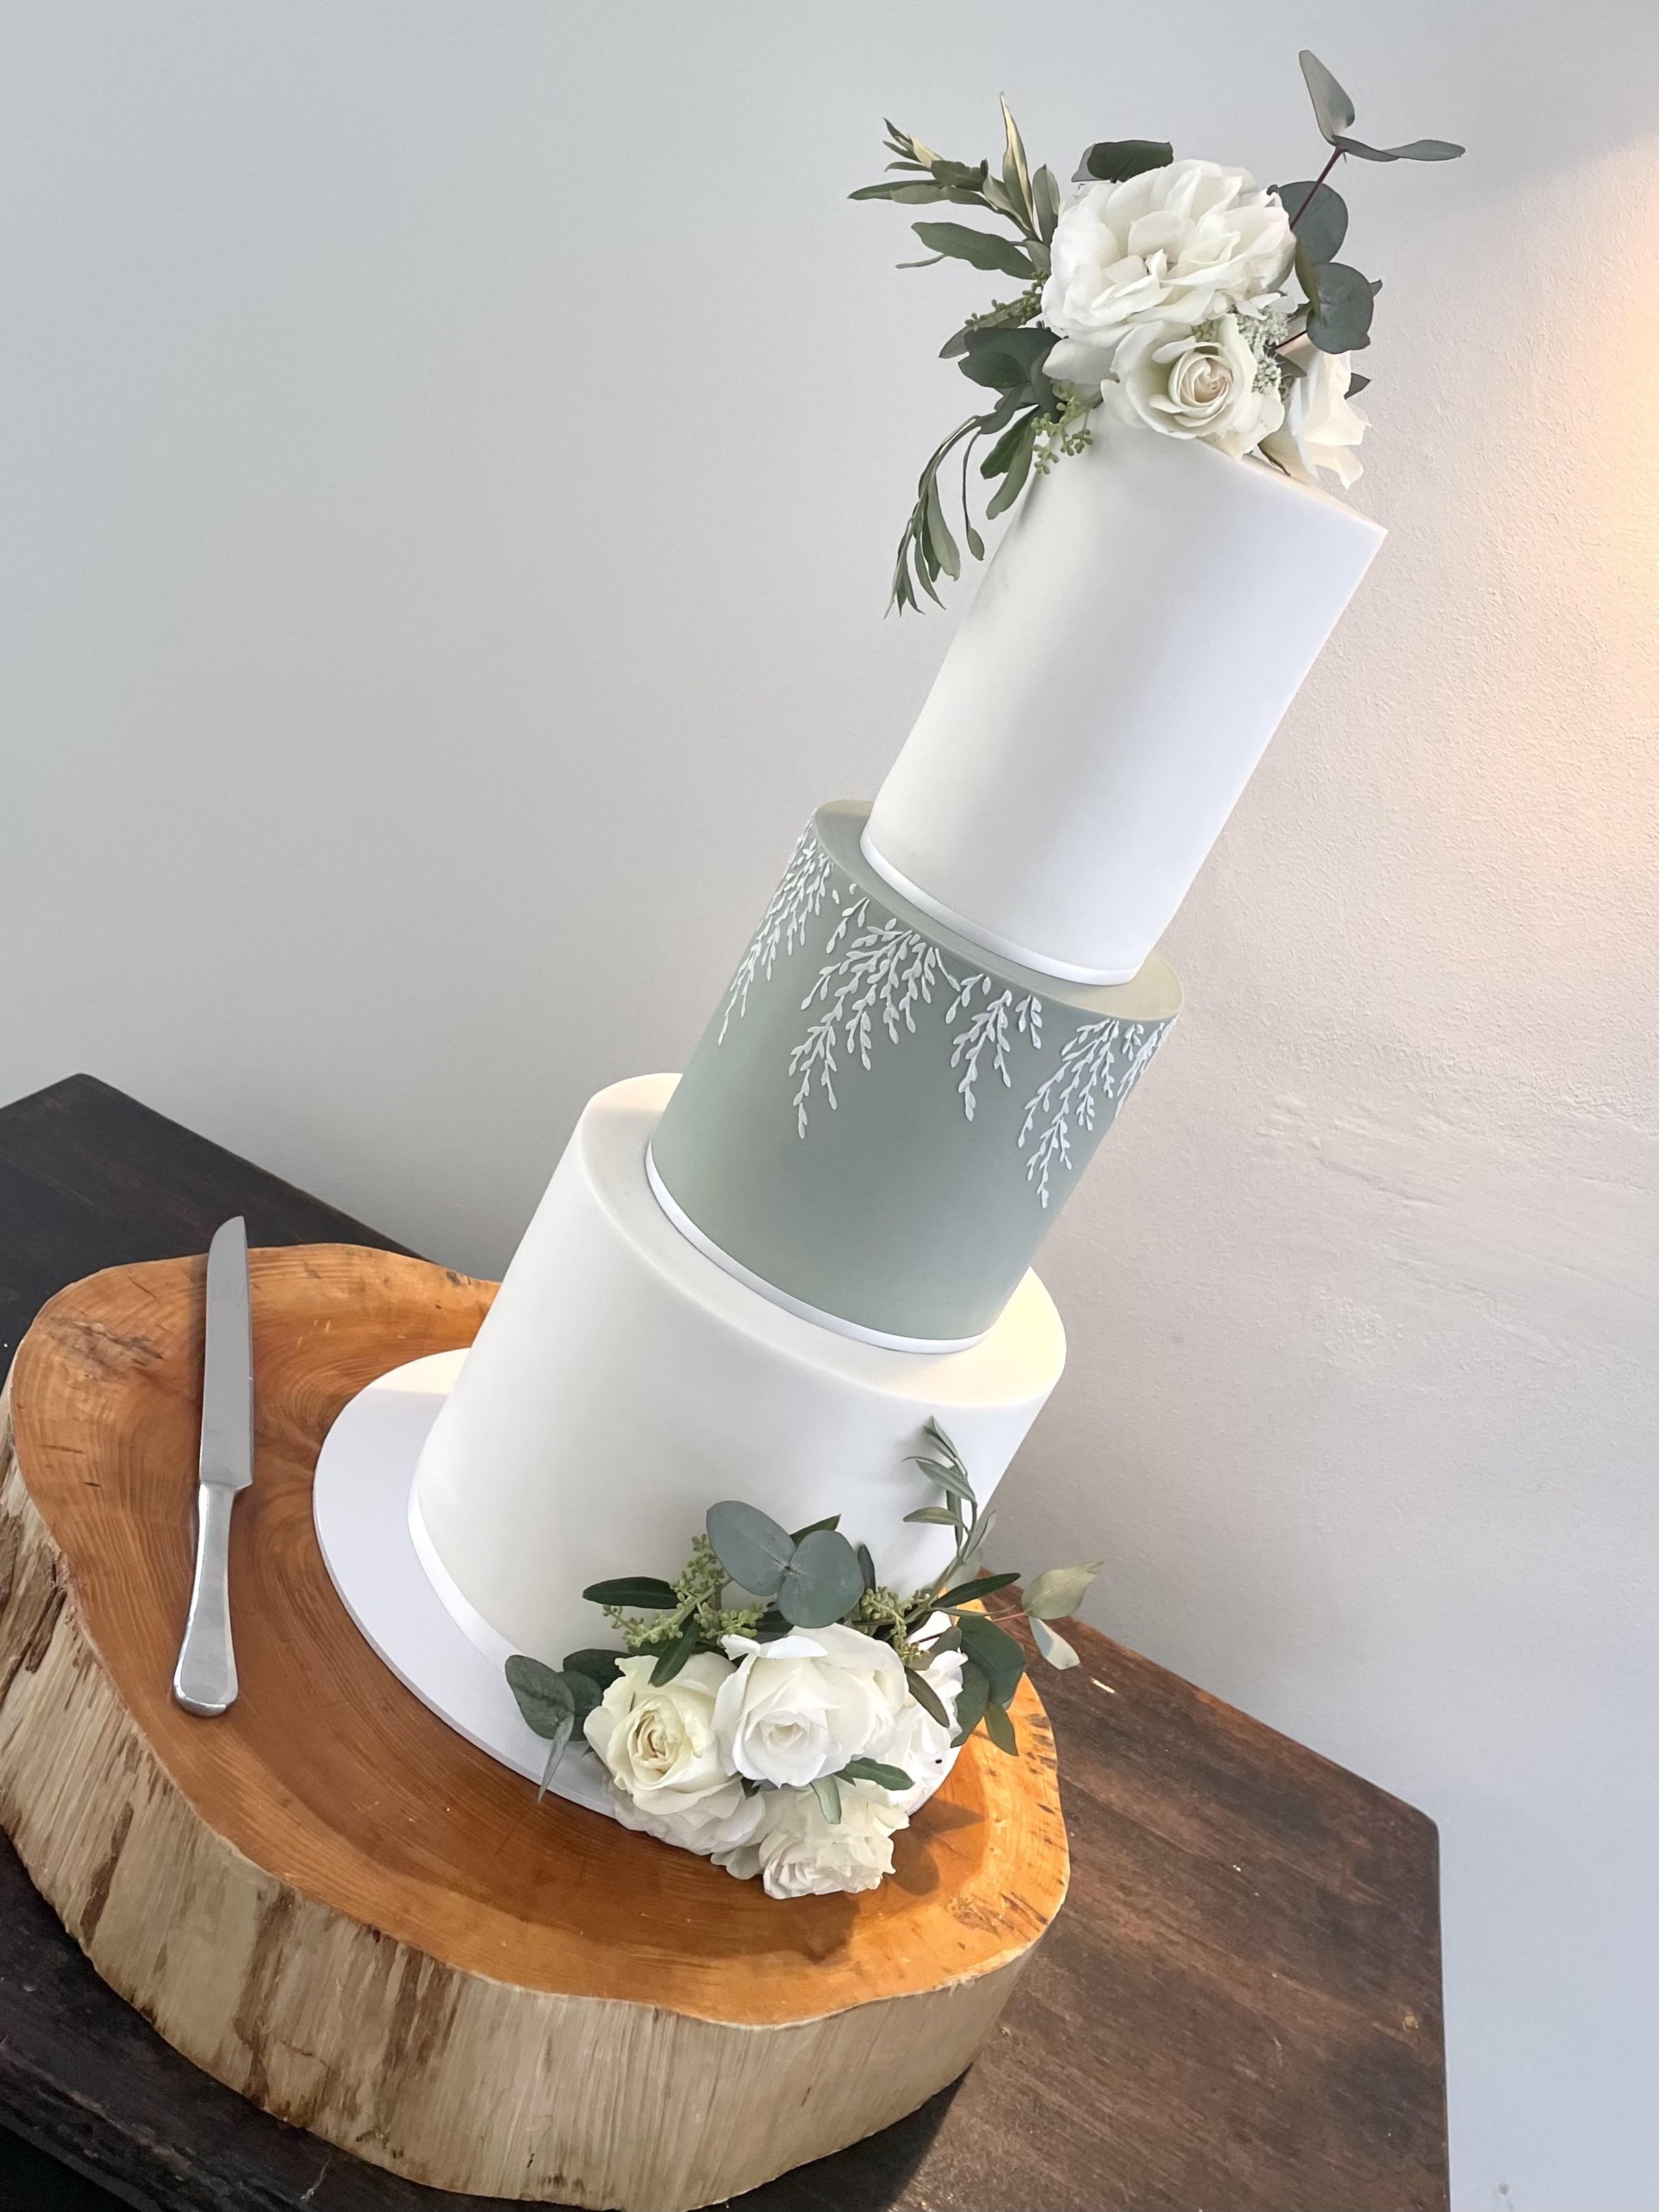 Sweet Fix RVA - Sun, moon, and stars wedding cake! | Facebook